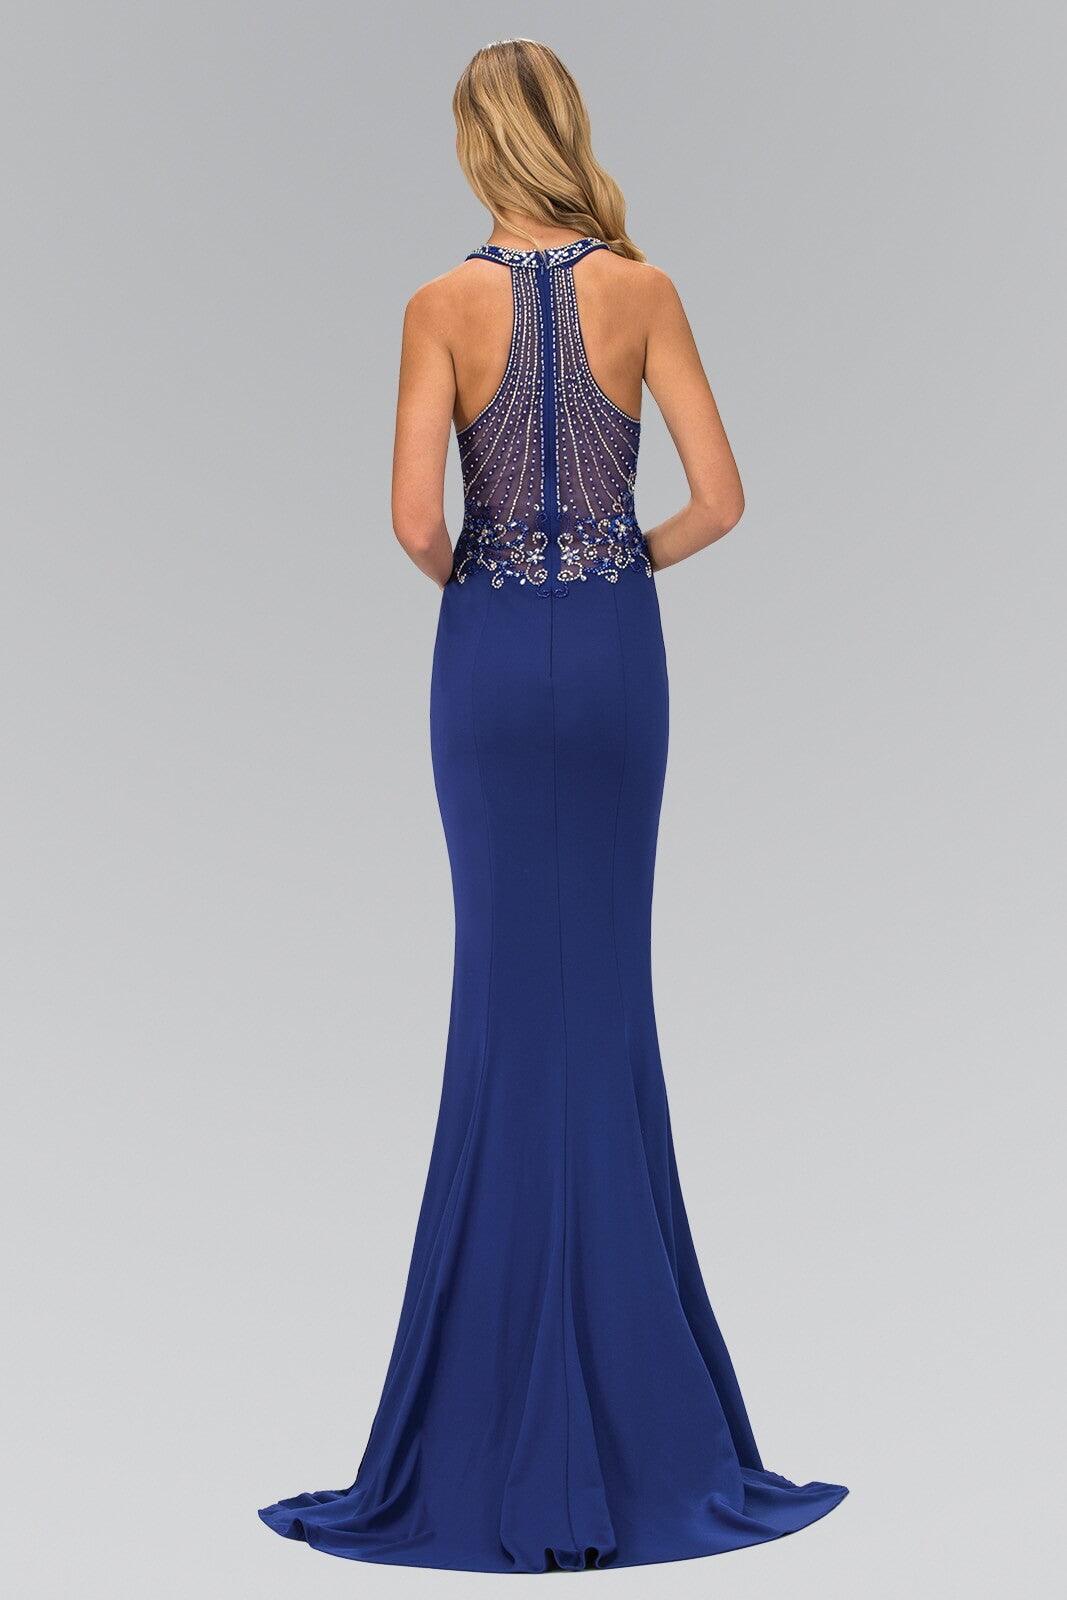 Long Beaded Halter Prom Dress Evening Gown - The Dress Outlet Elizabeth K